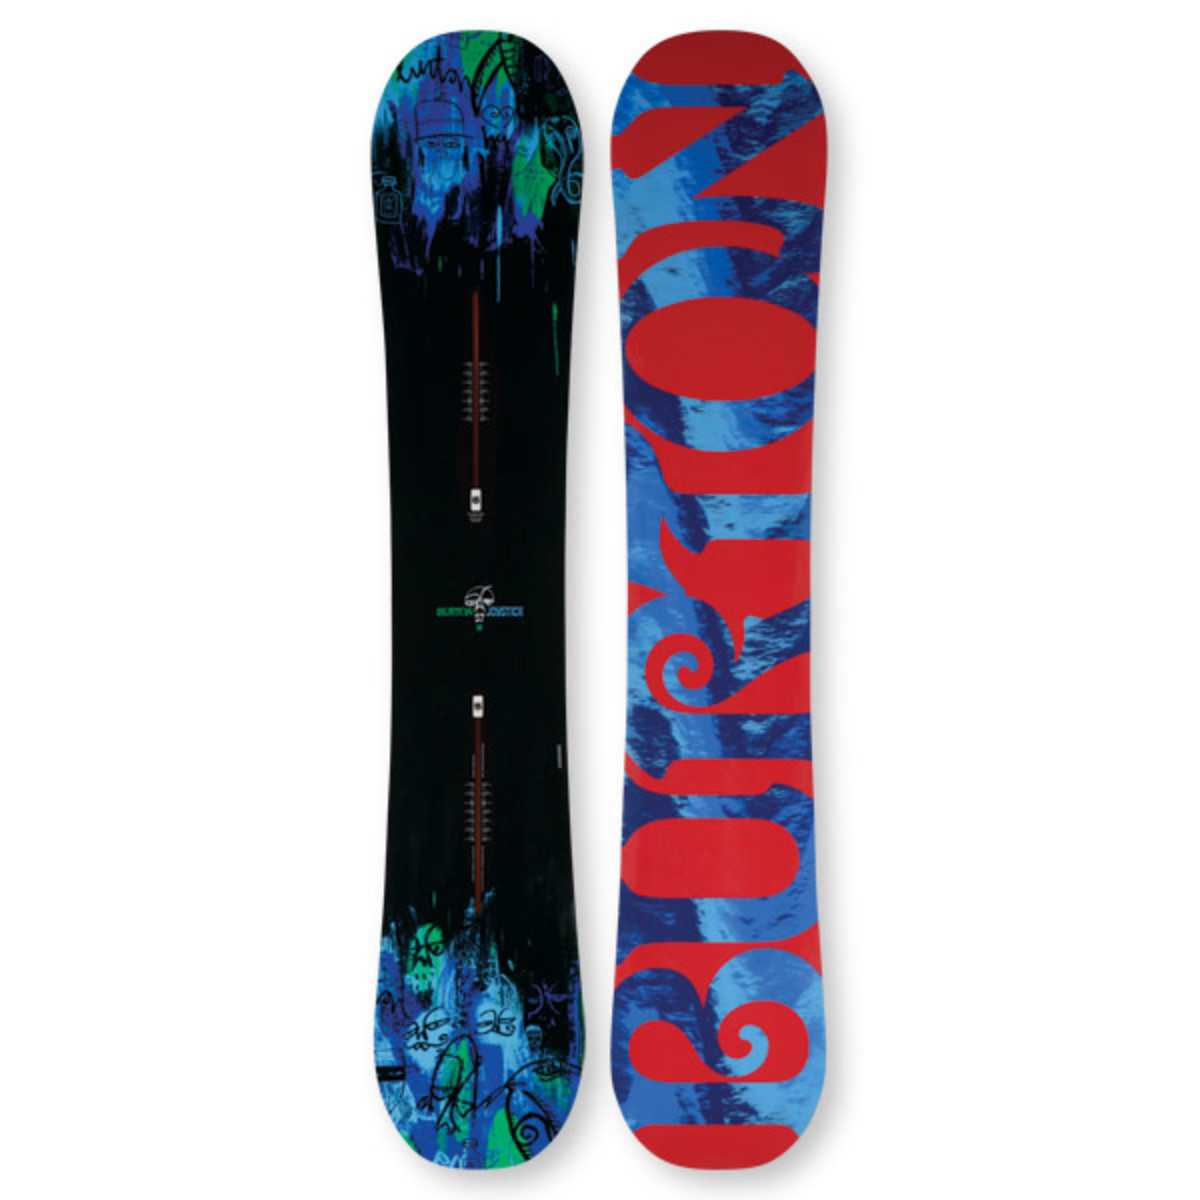 Buy Joystick Snowboards for Snowboard Gear at Snowboarder Magazine - Snowboarder